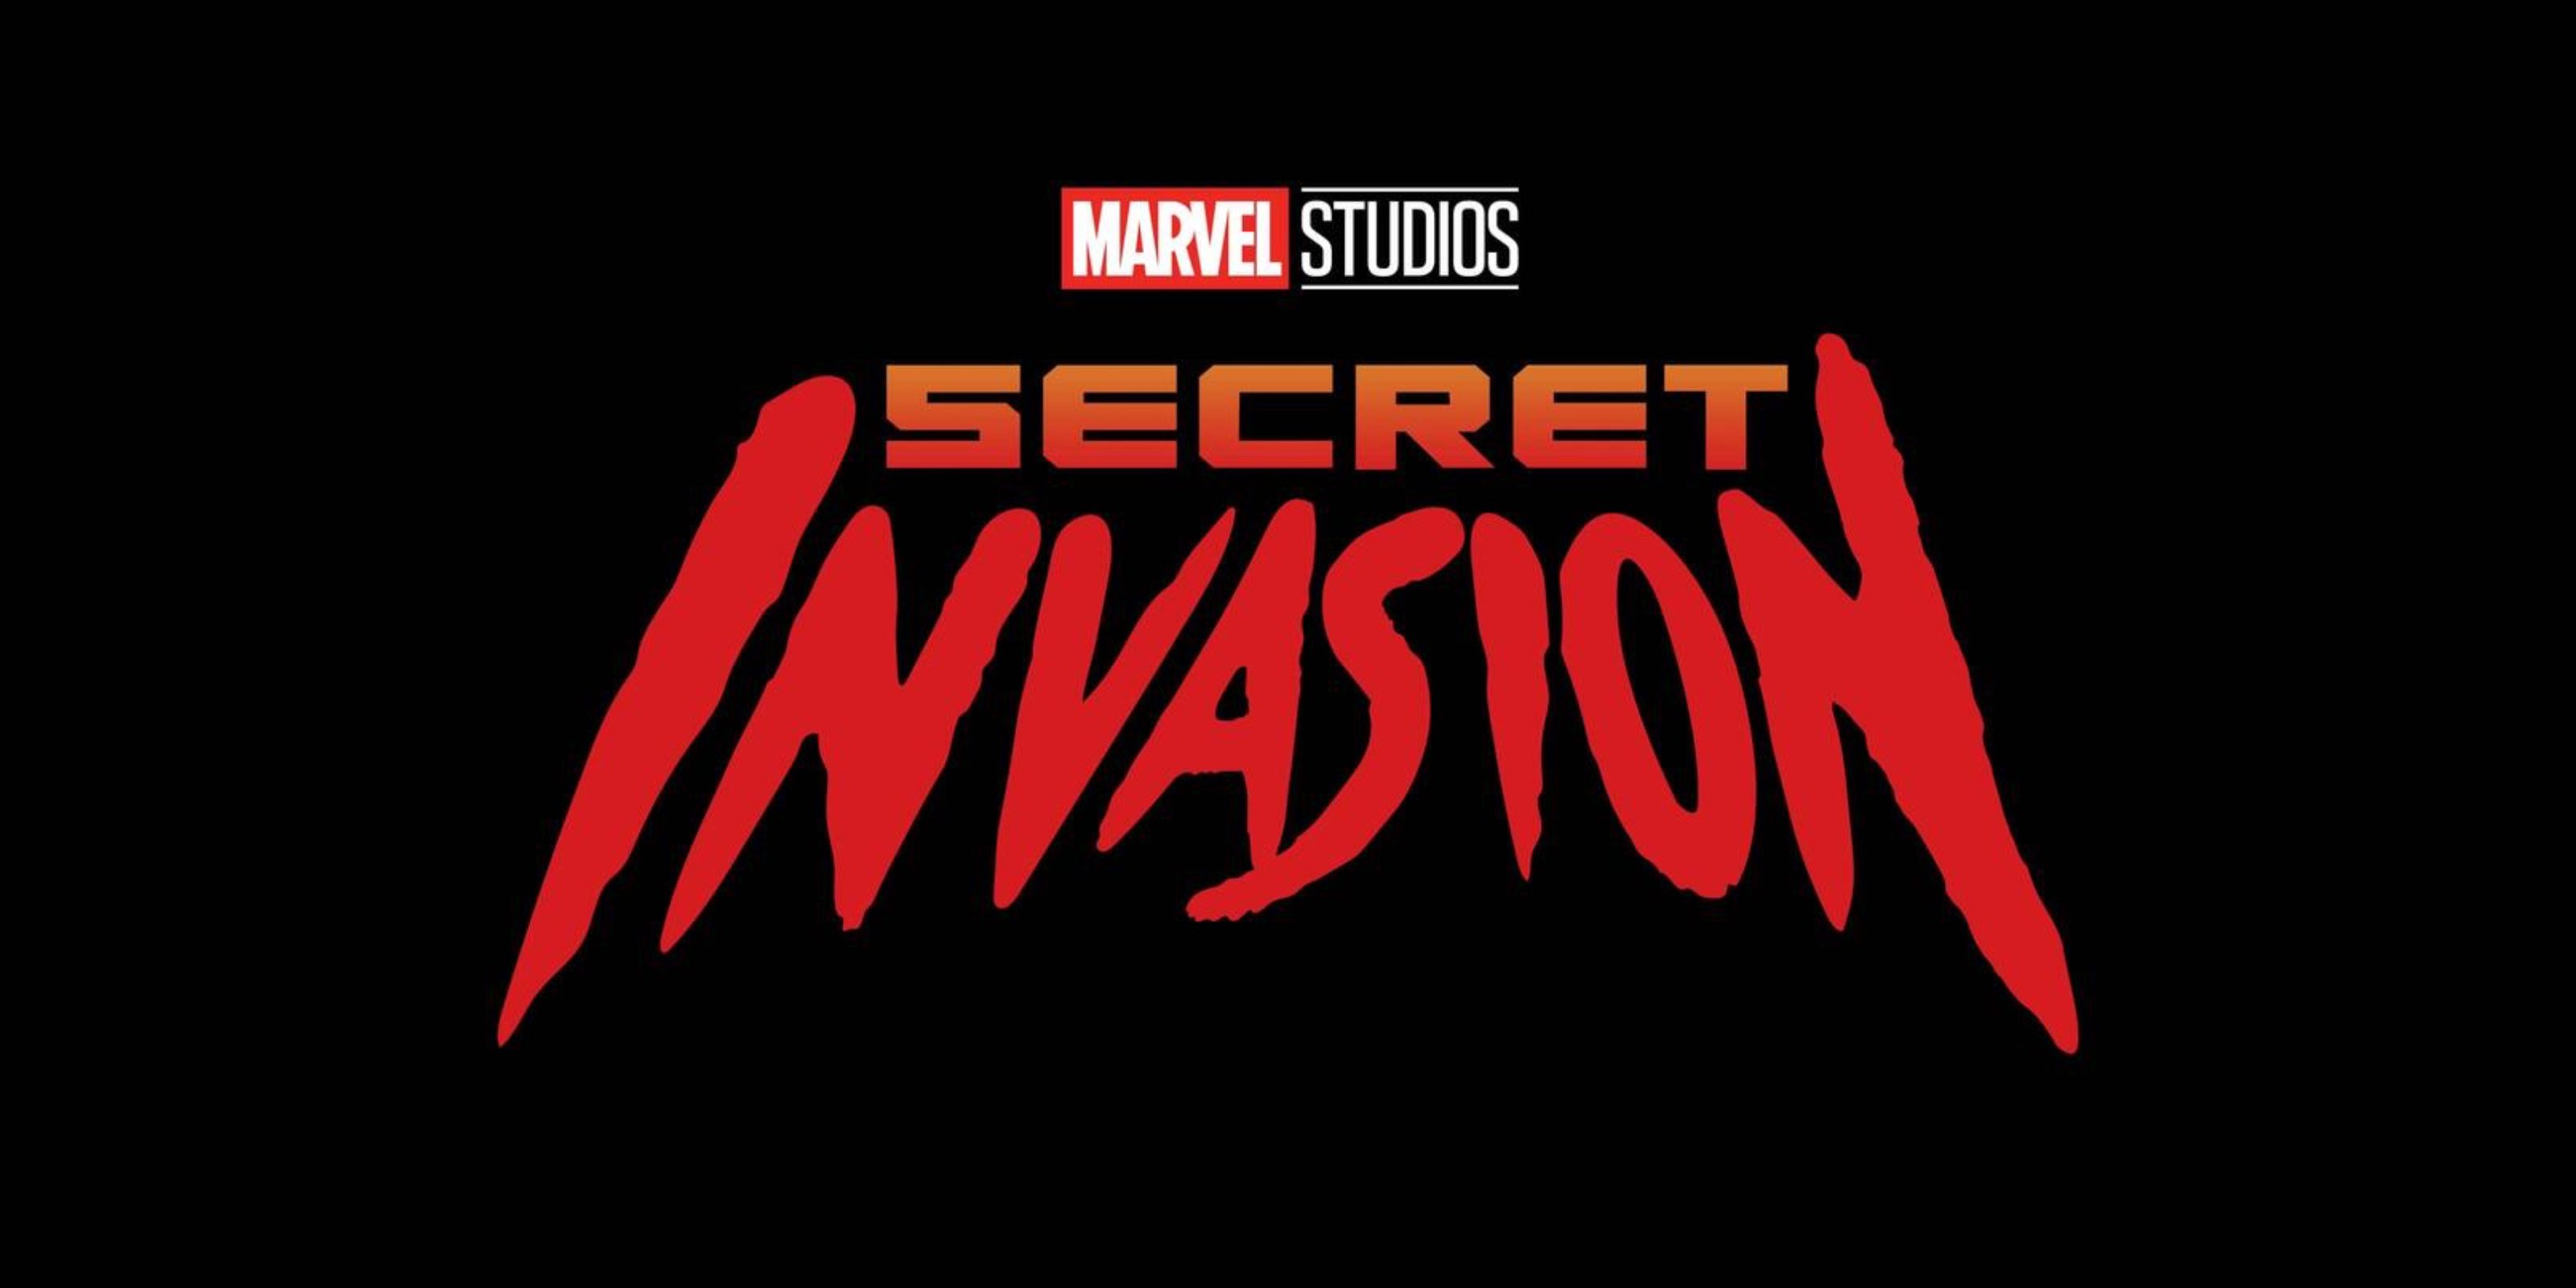 Secret Invasion title card